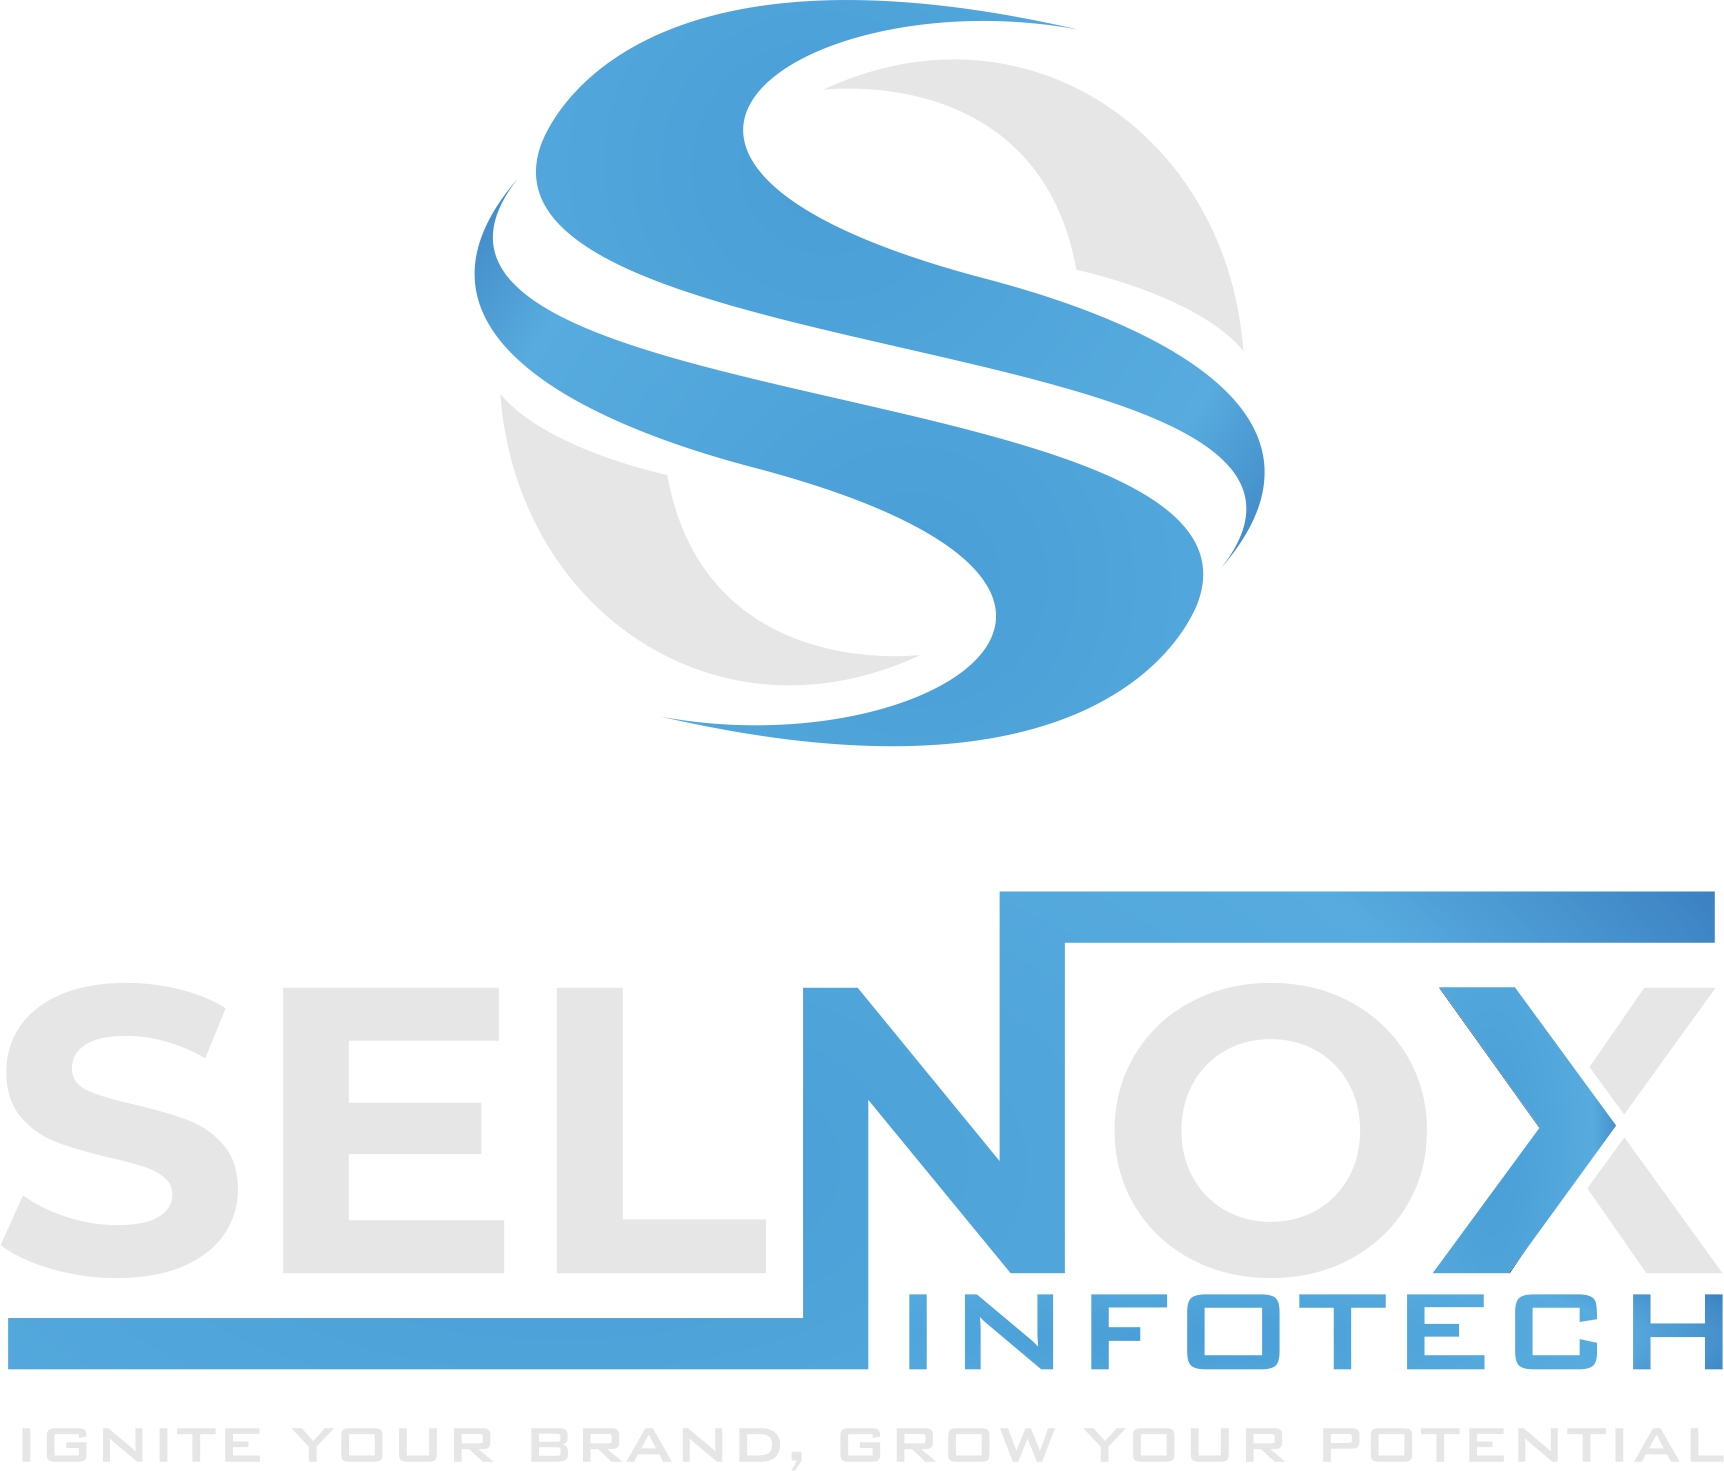 Selnox Infotech Digital Marketing Agency| Global Service Provider